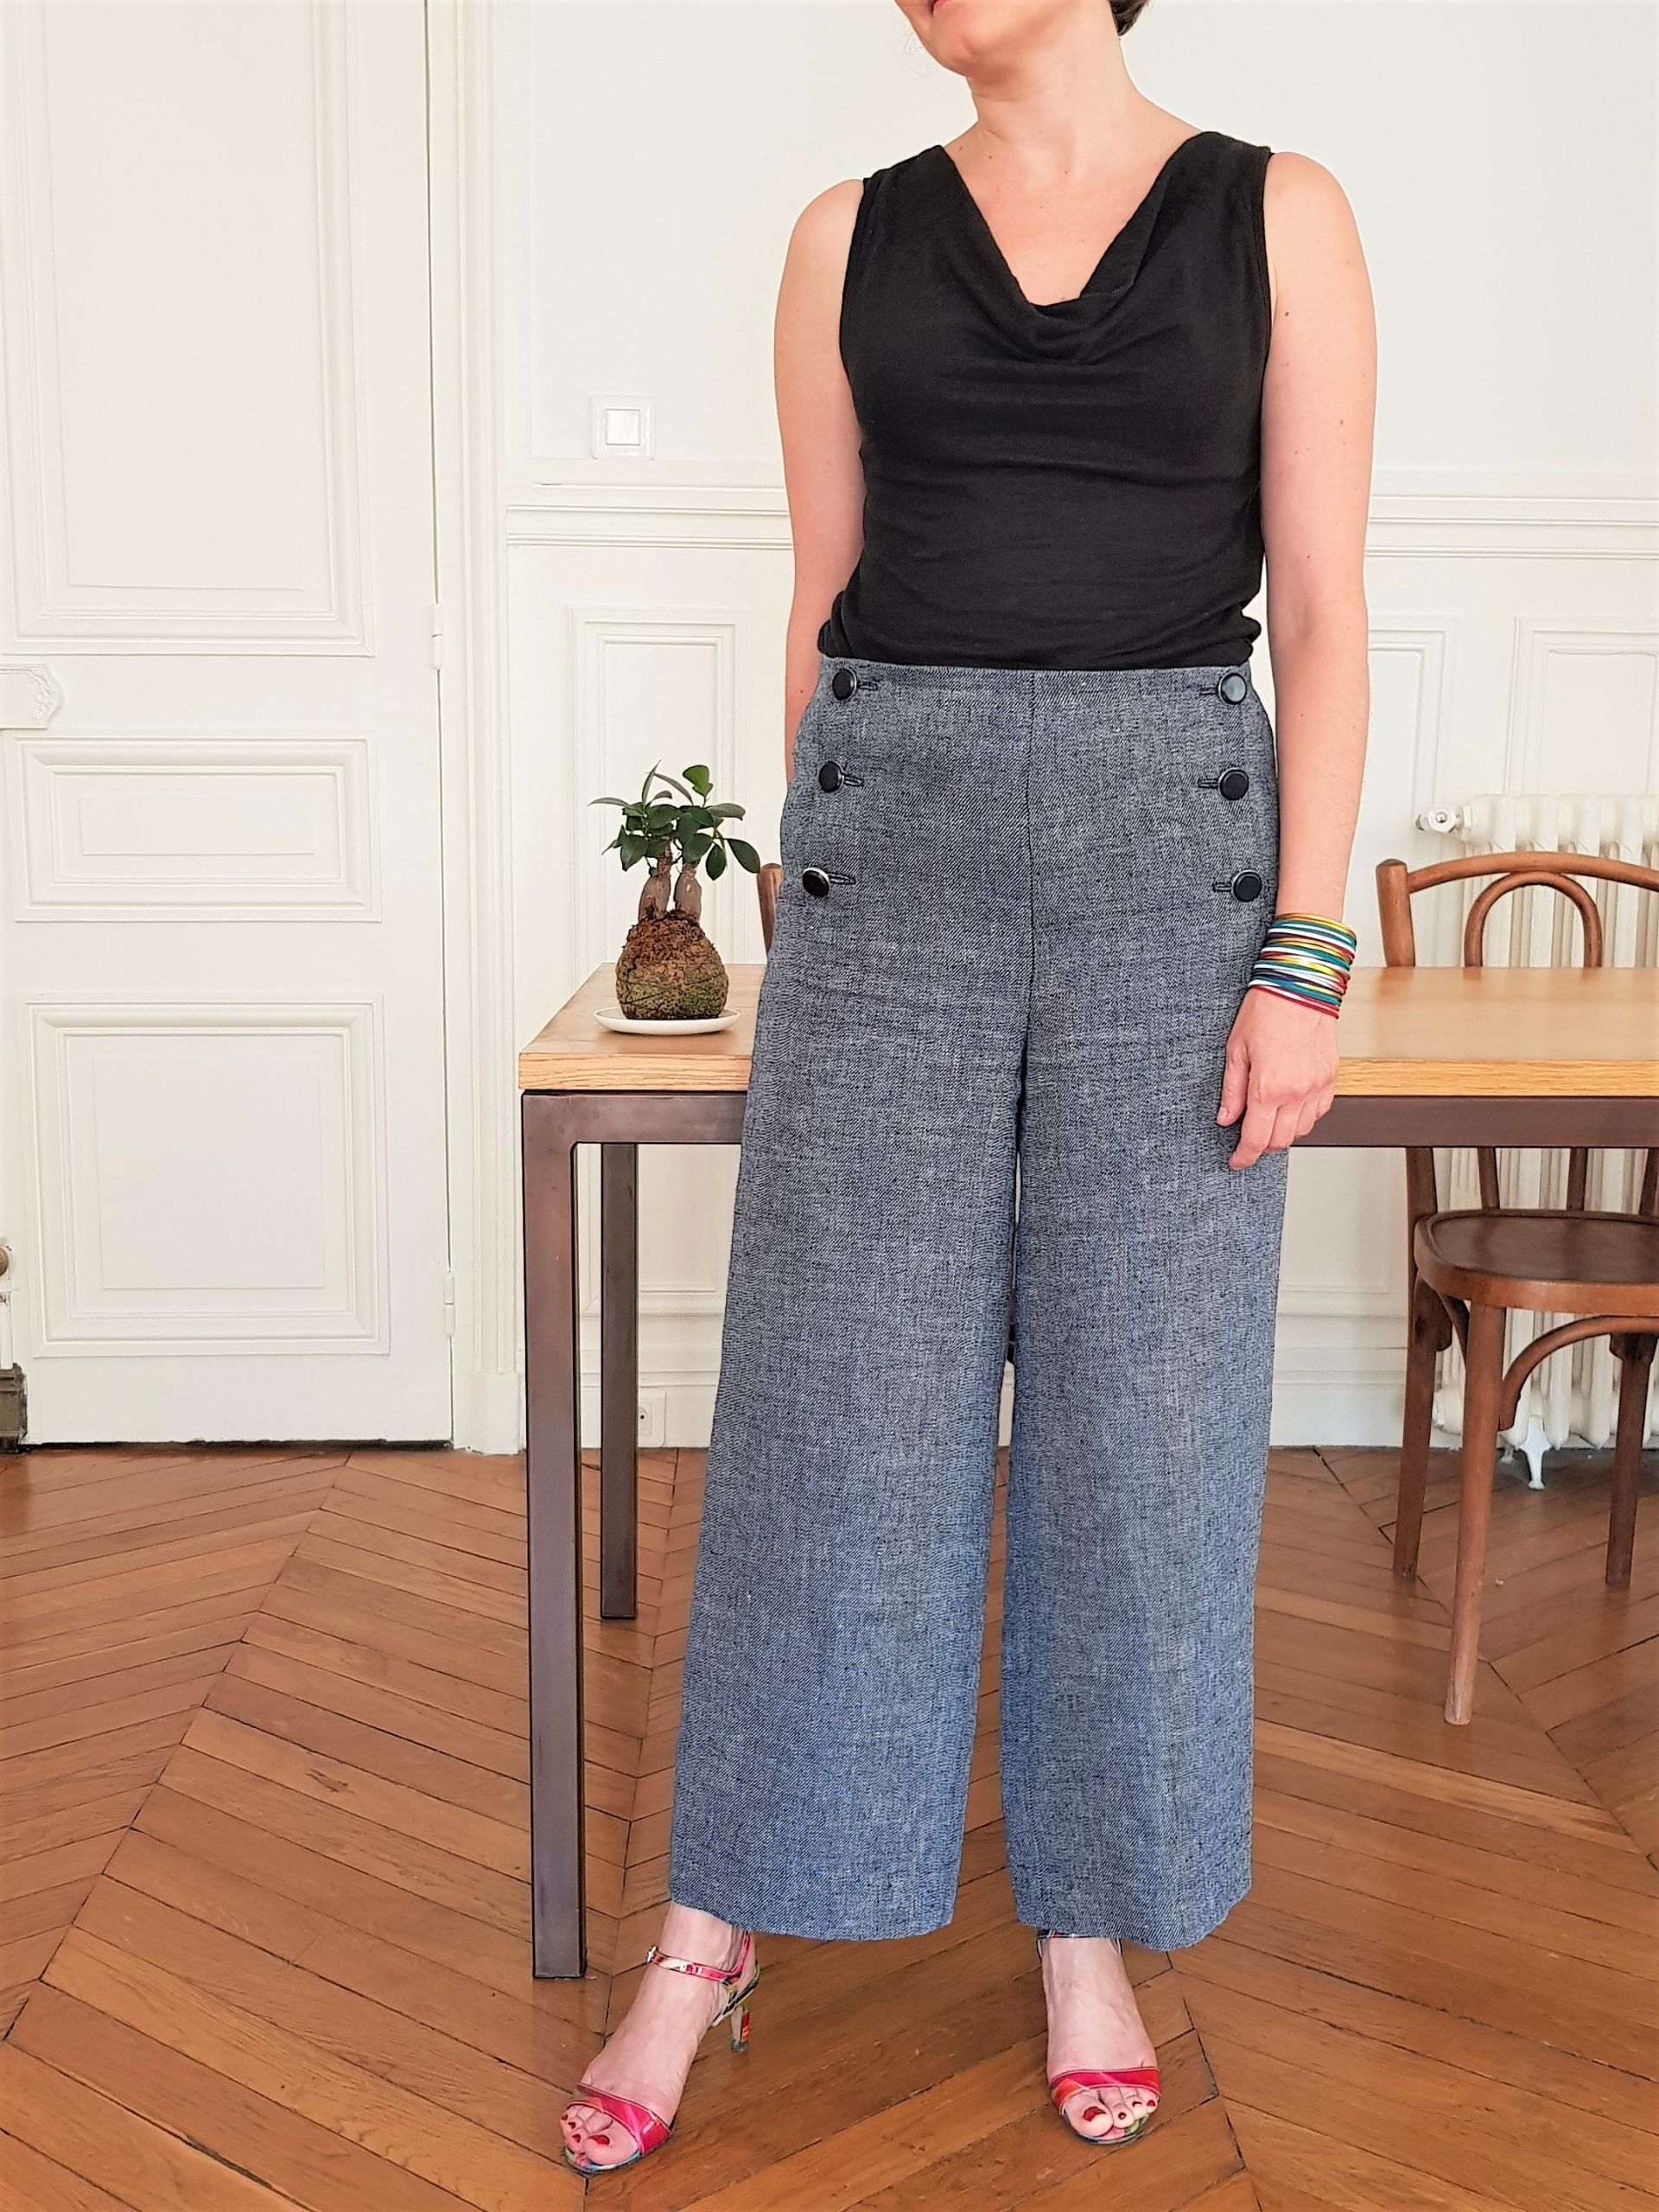 Pantalon ATOMIC - DressYourBody - Patron de couture femme.